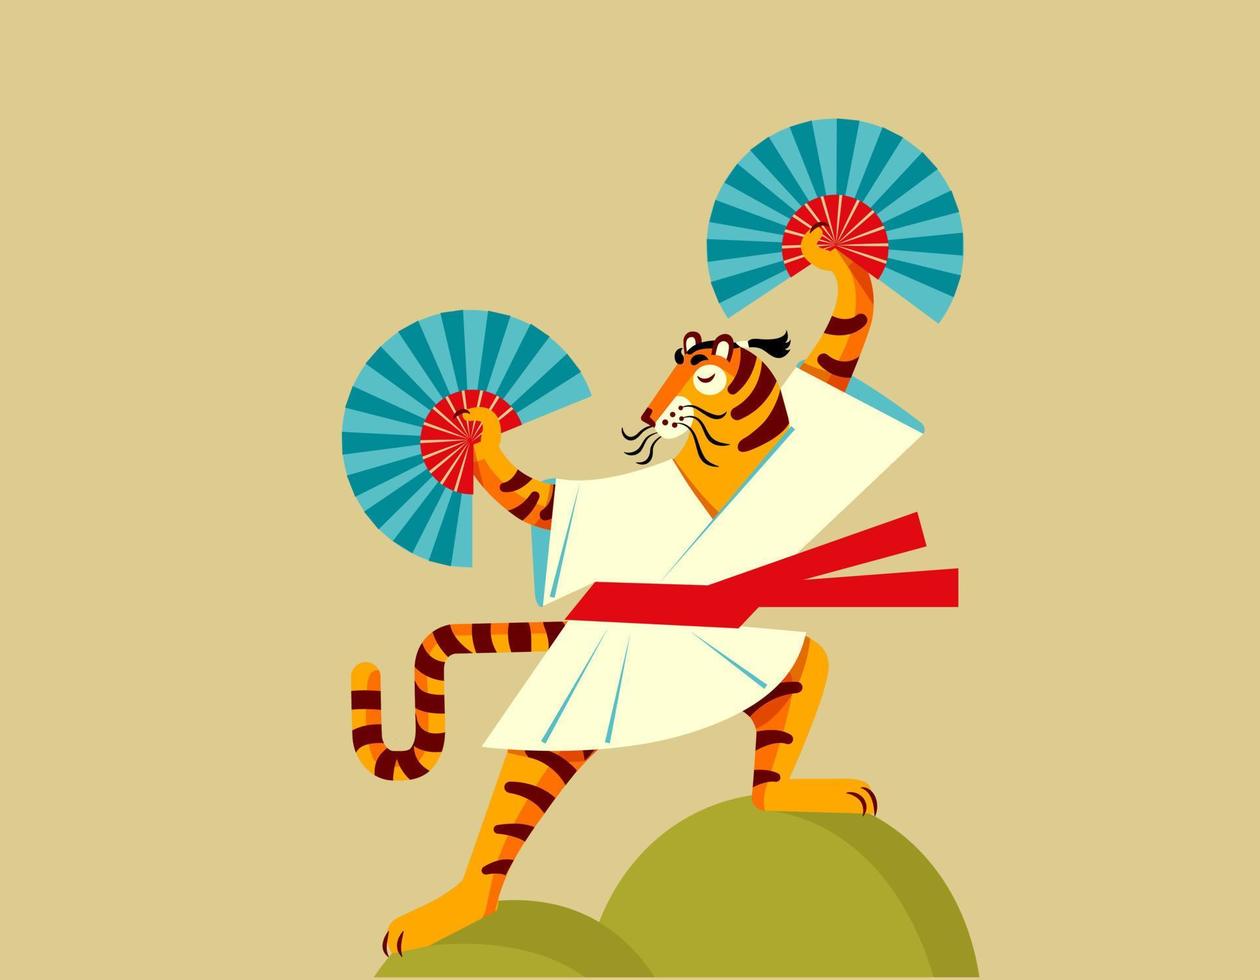 A samurai tiger in a kimono performs a dance with fans. Vector illustration - poster, postcard.